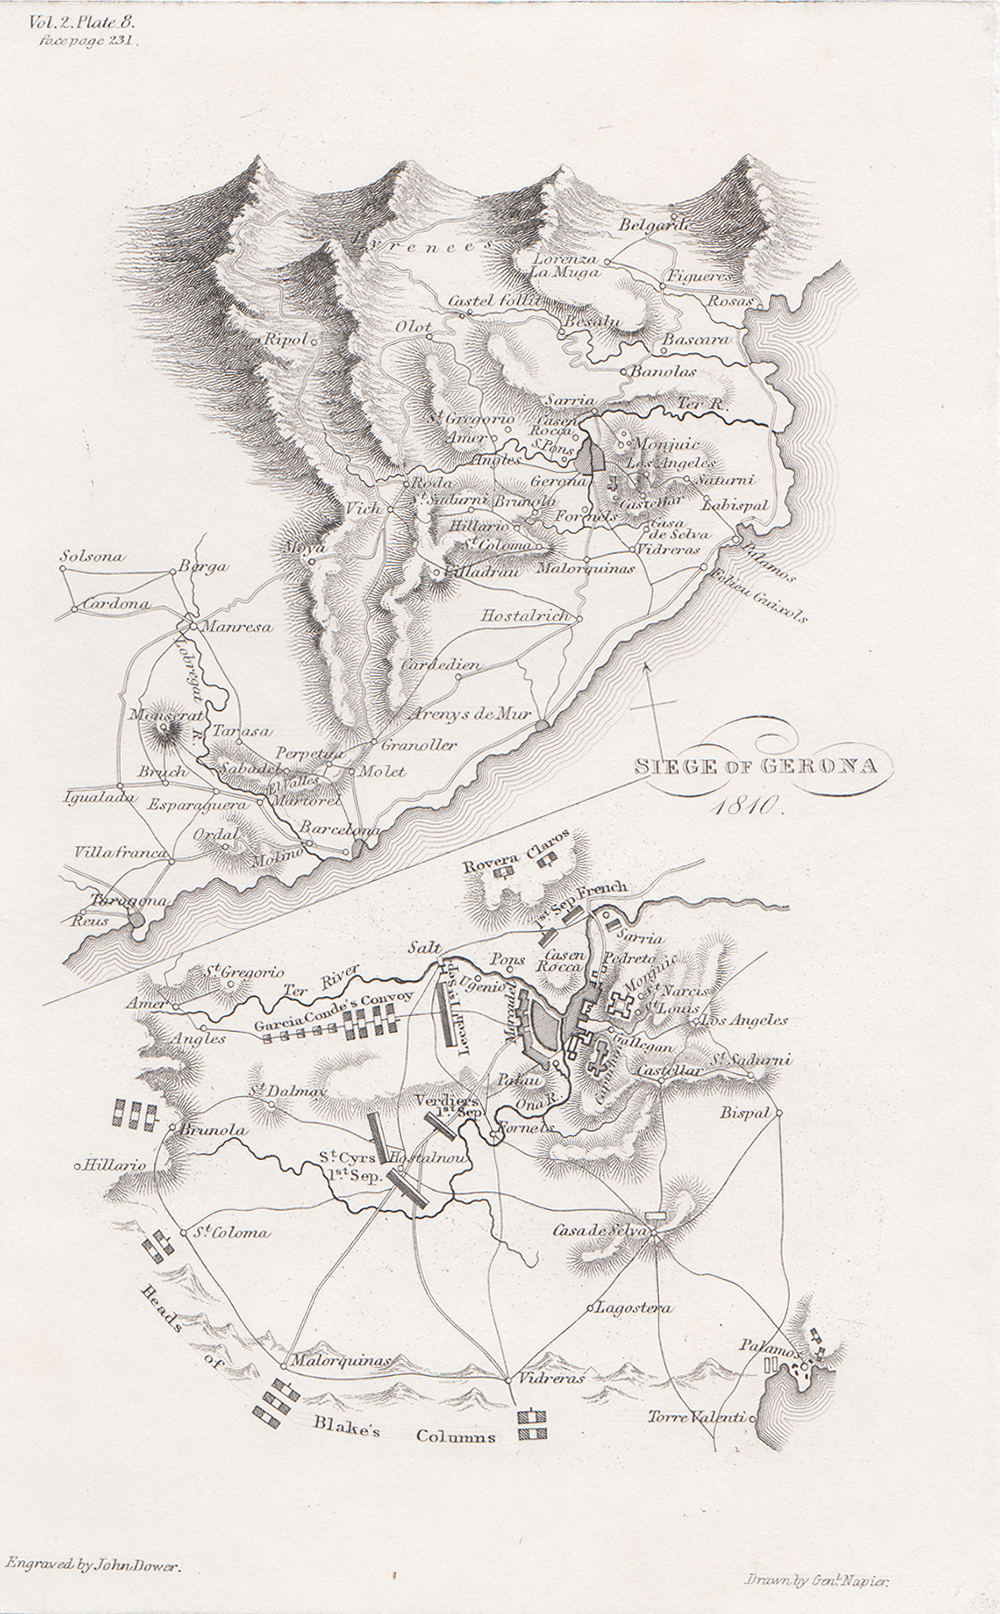 Siege of Gerona 1810